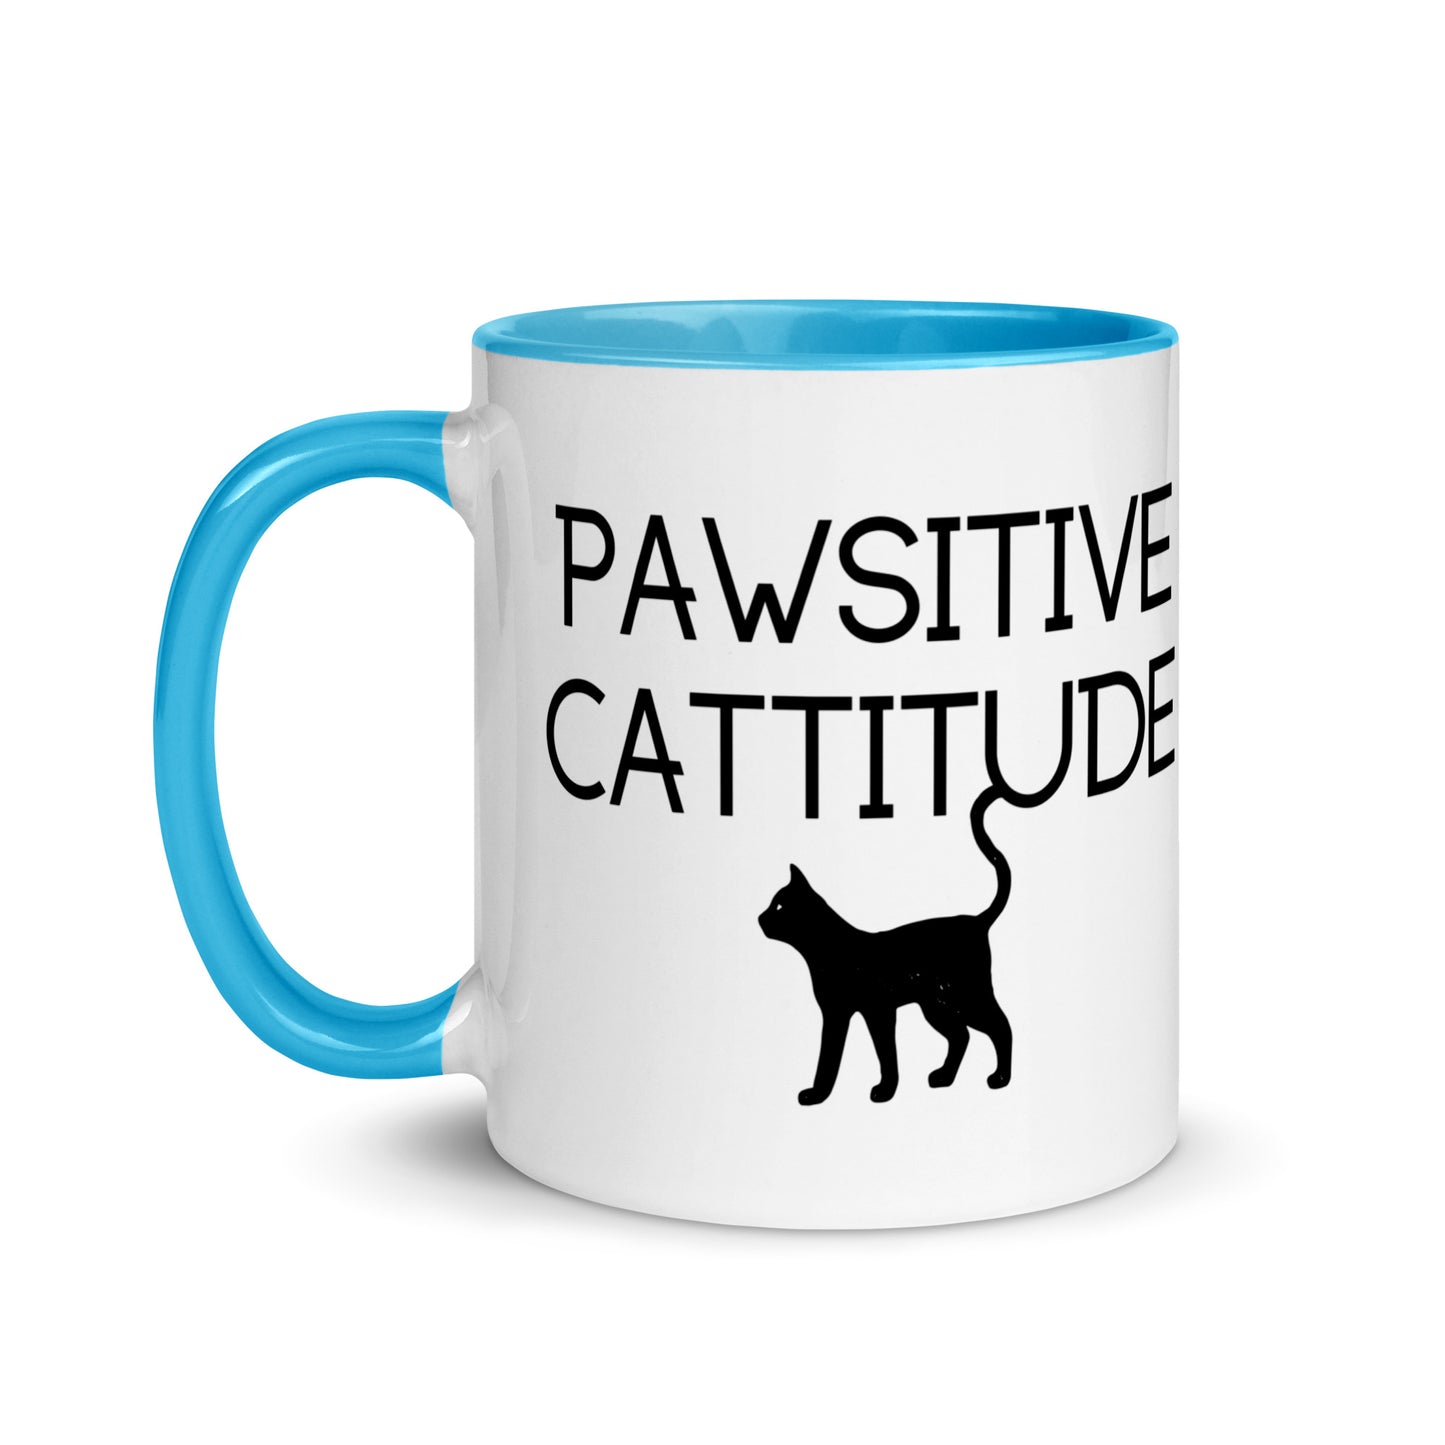 Pawsitive Cattitude Mug with Color Inside